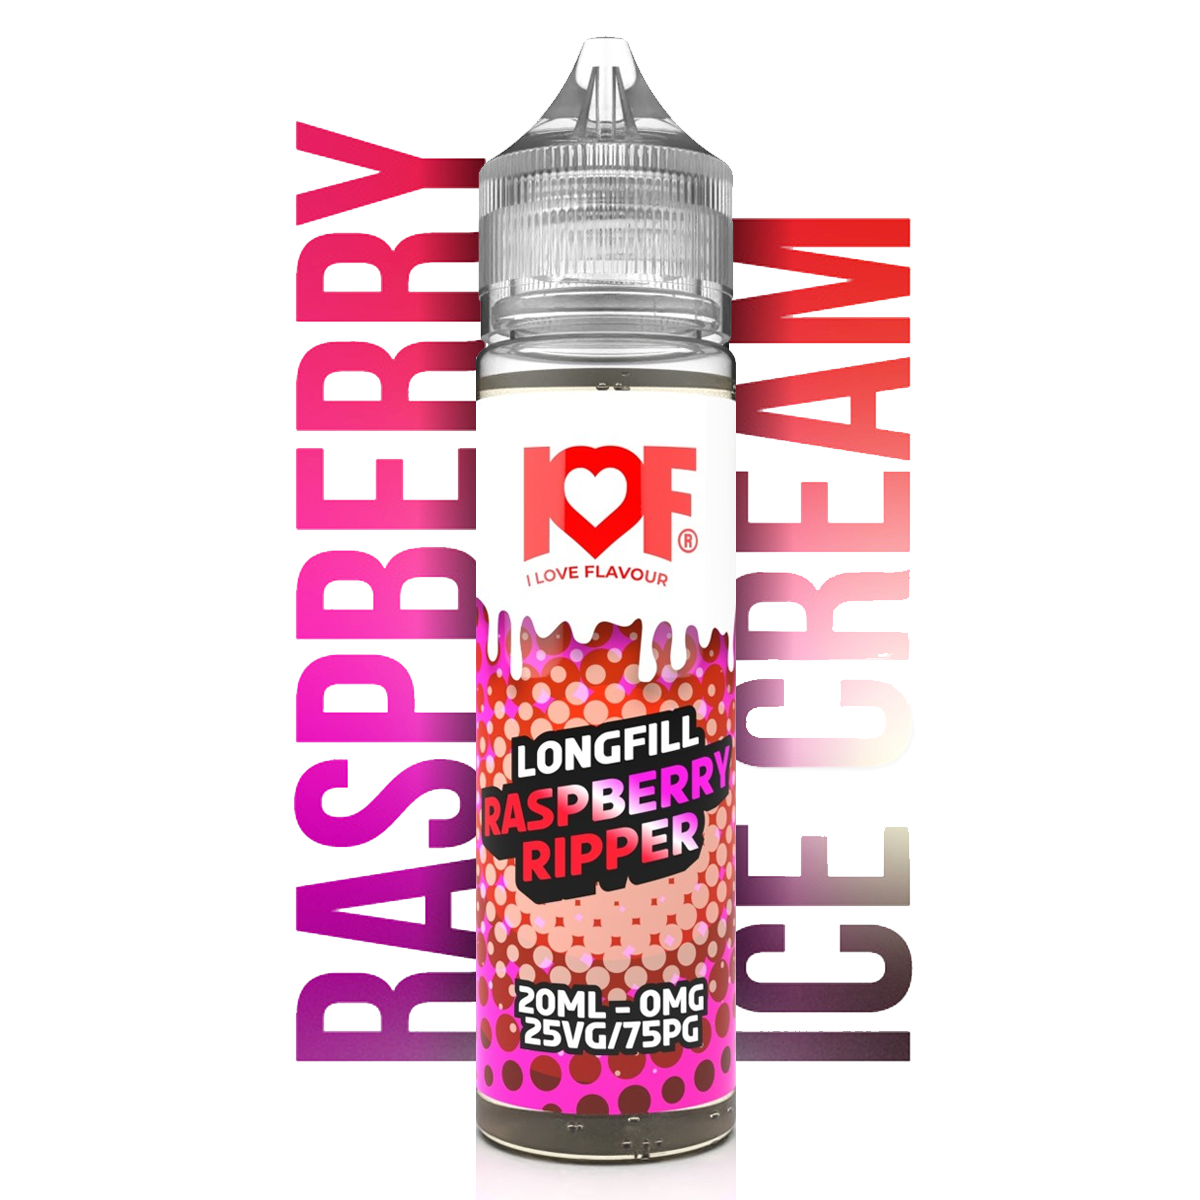 I Love Flavour - Raspberry Ripper 60ml Longfill